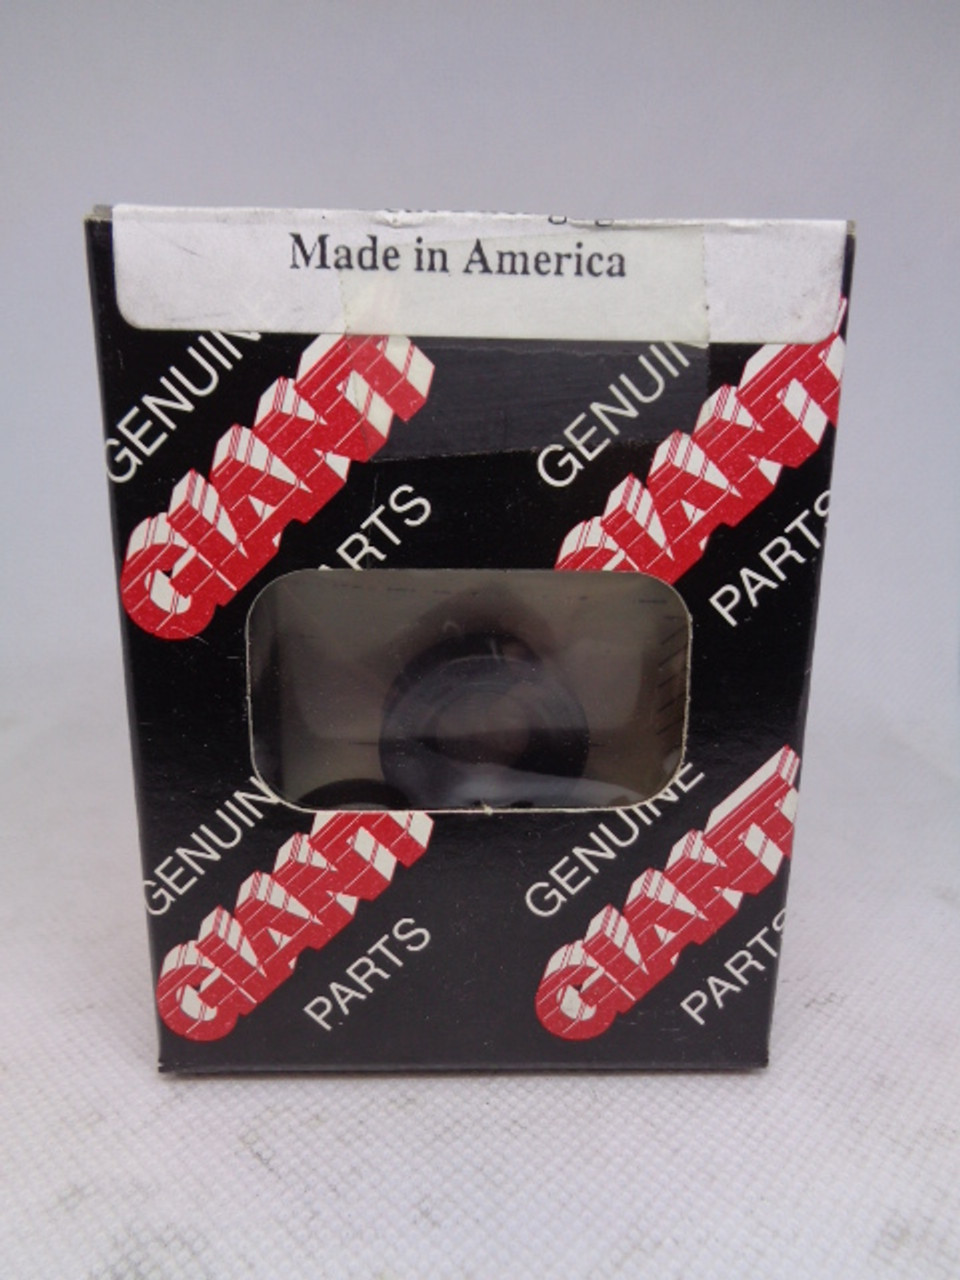 (9) Giant Industries Inc. 2070PKG Radial Piston Rod Oil Seal Package / Kits